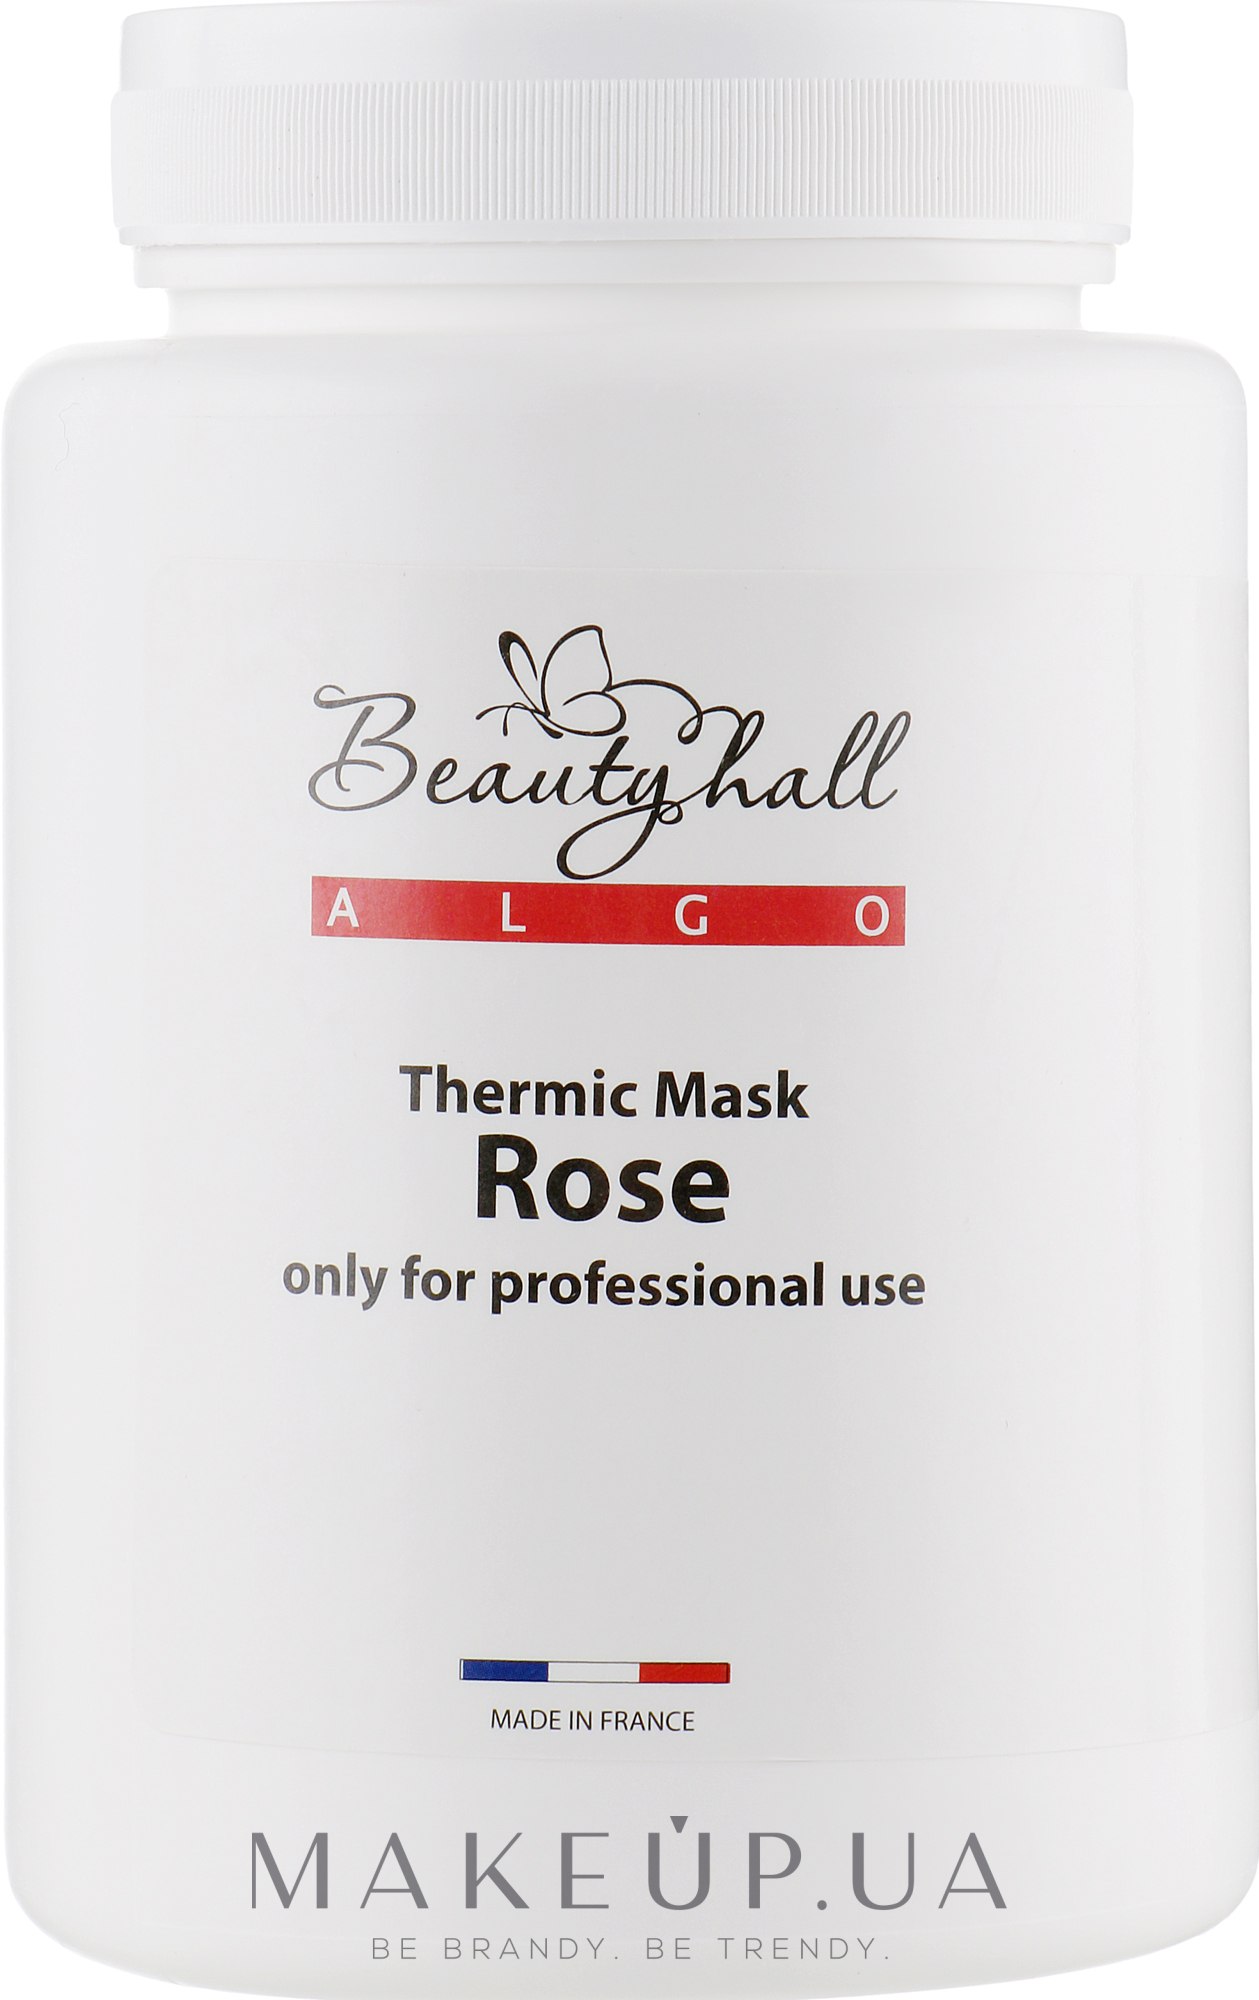 Гіпсова термомоделювальна маска "Троянда" - Beautyhall Algo Thermic Mask Rose — фото 200g